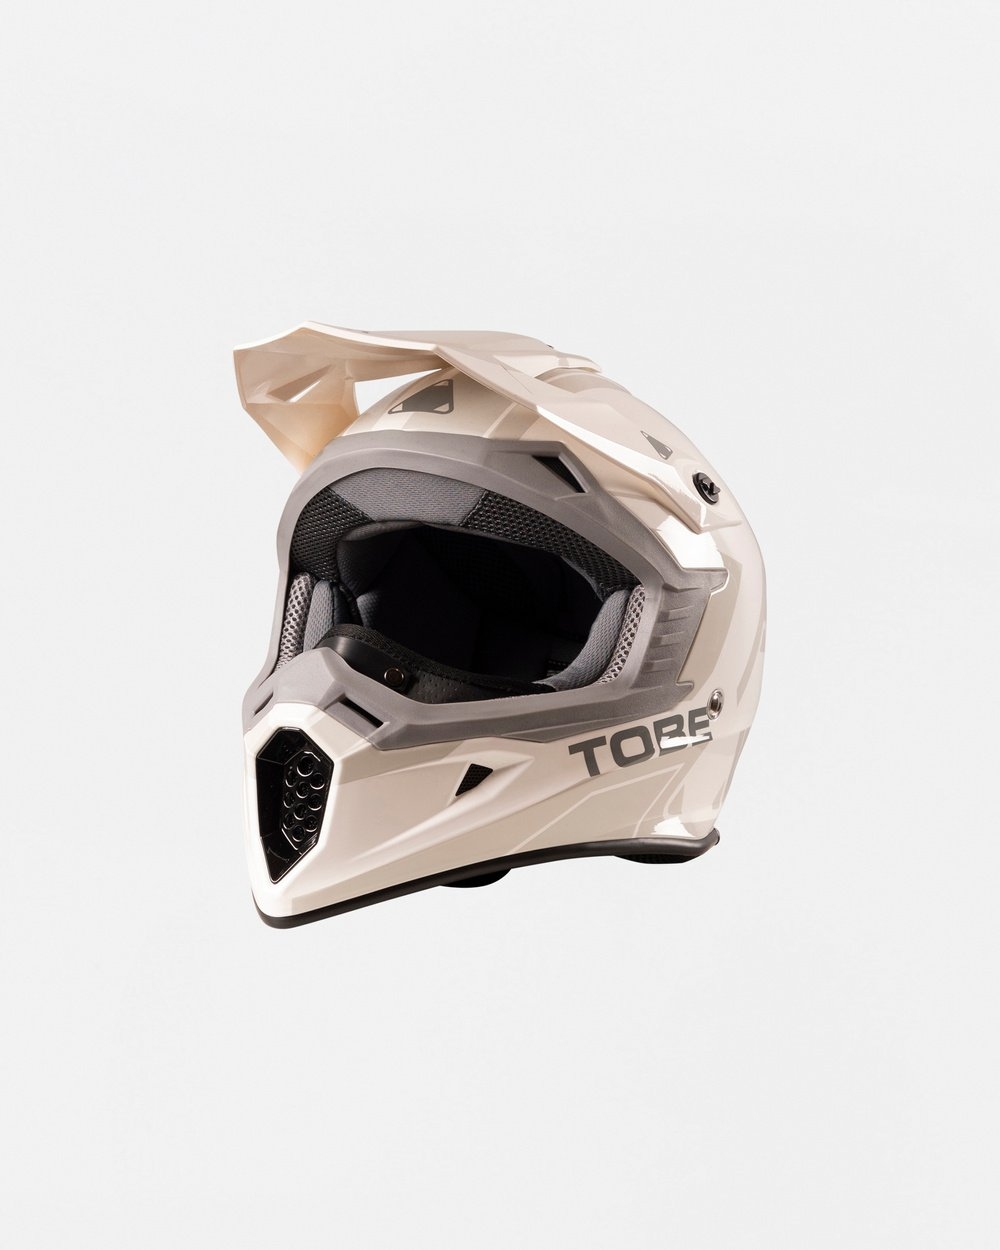 Mantle Helmet - Flow White